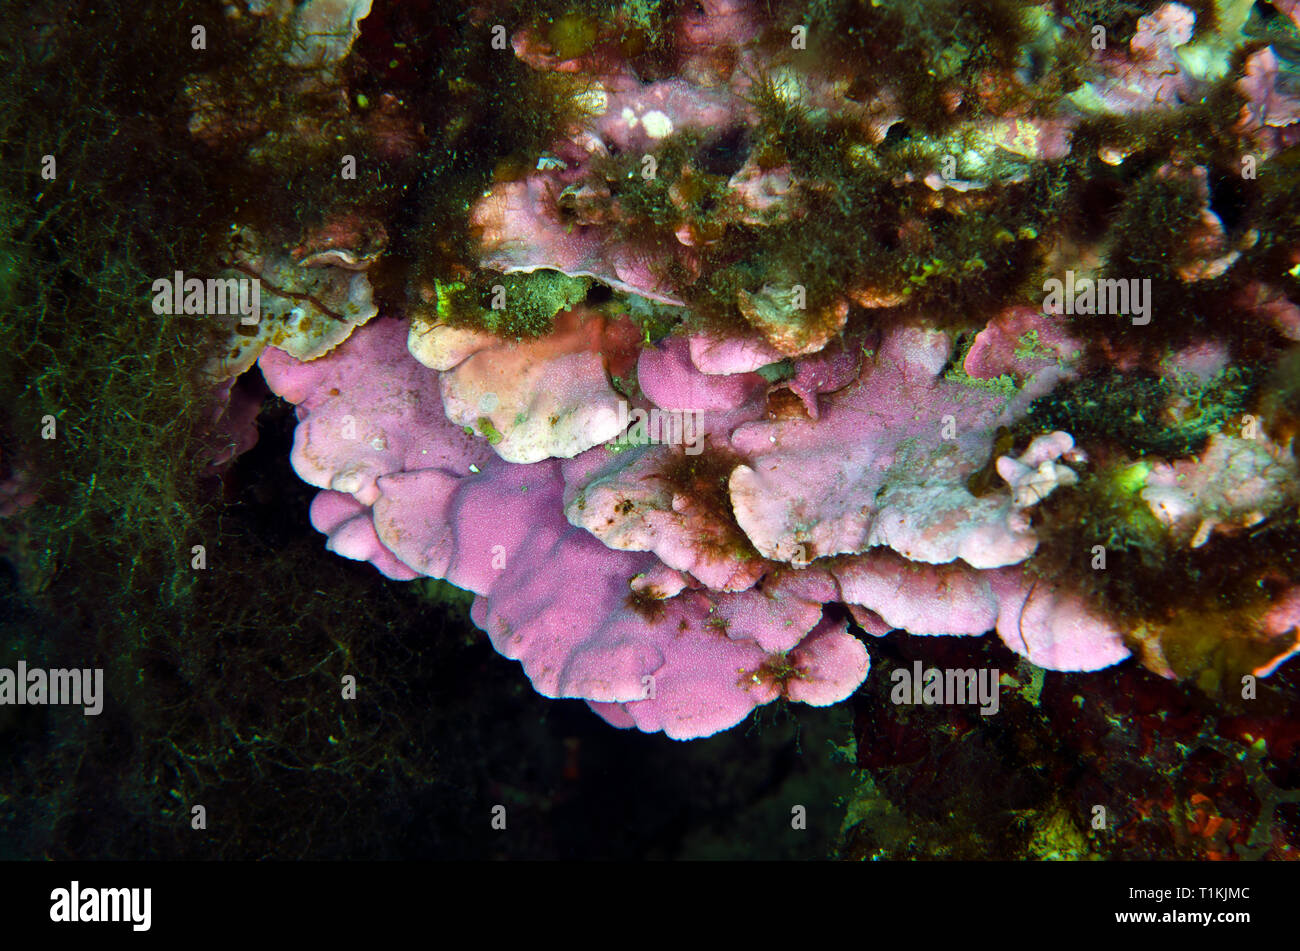 Coralligenous red alga, Lithophyllum cabiochiae, Corallinaceae, Tor Paterno Marine Protected Area, Rome, Italy, Mediterranean Sea Stock Photo